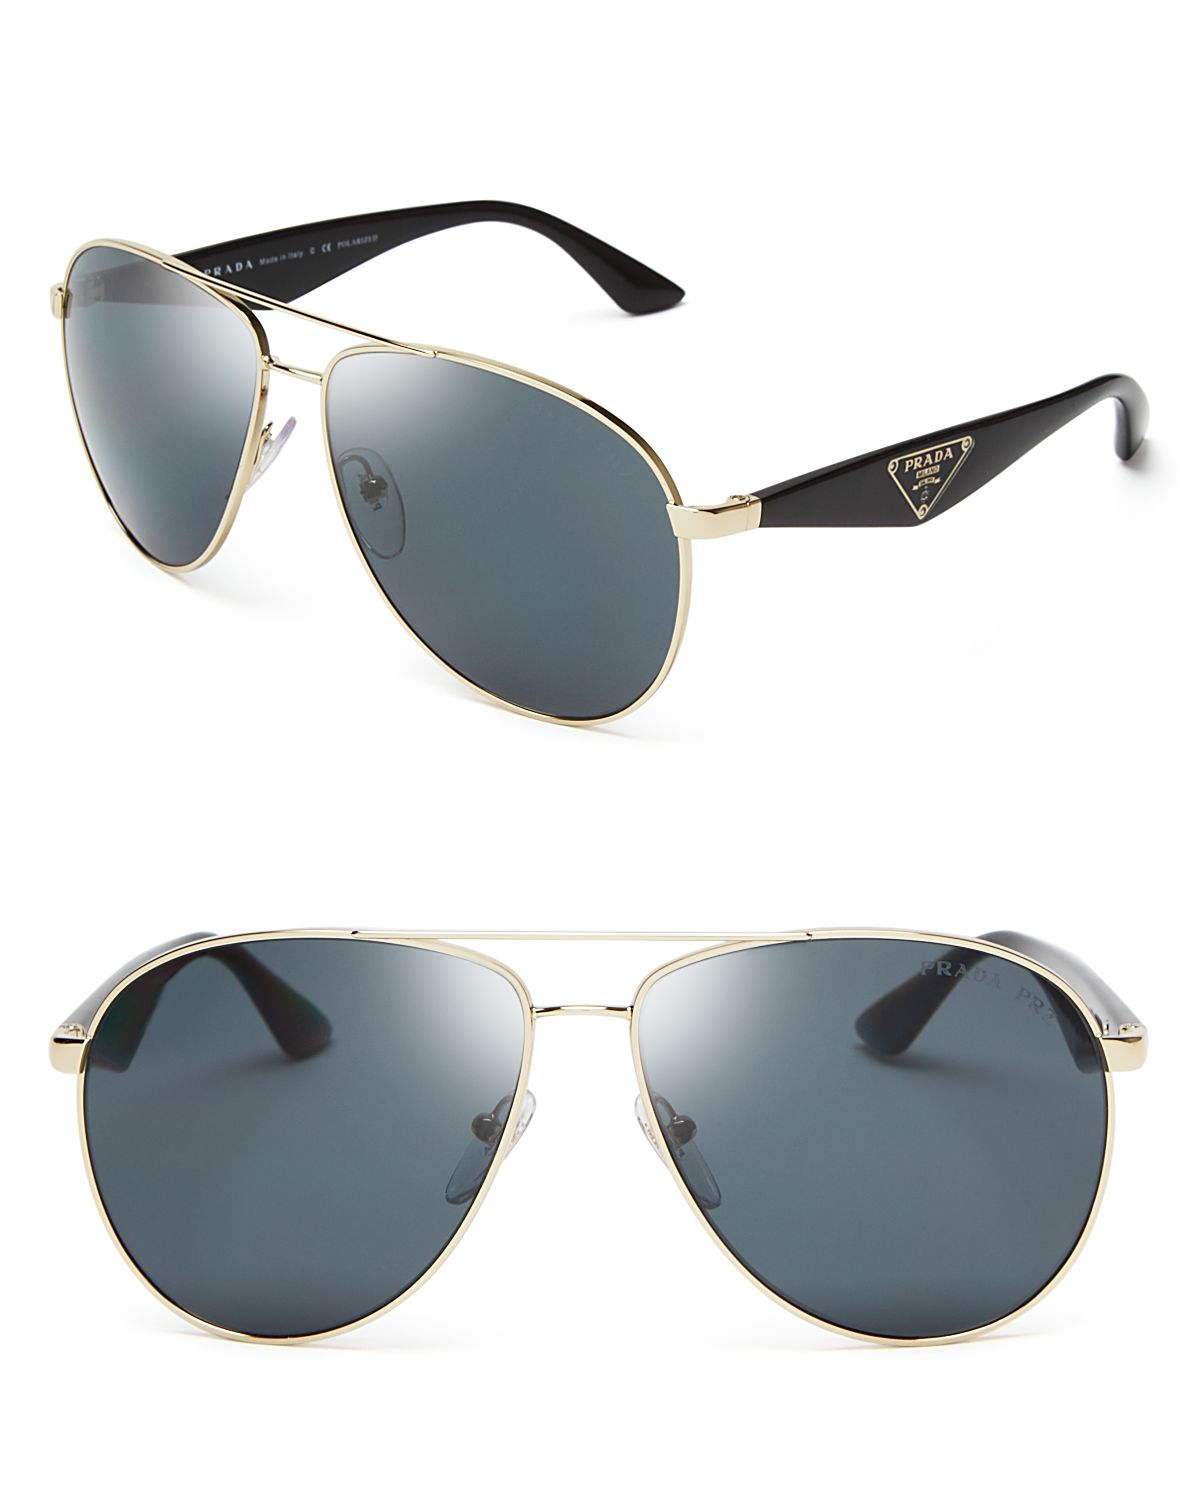 Prada Polarized Double Bar Aviator Sunglasses in Pale Gold/Grey (Metallic)  for Men - Lyst